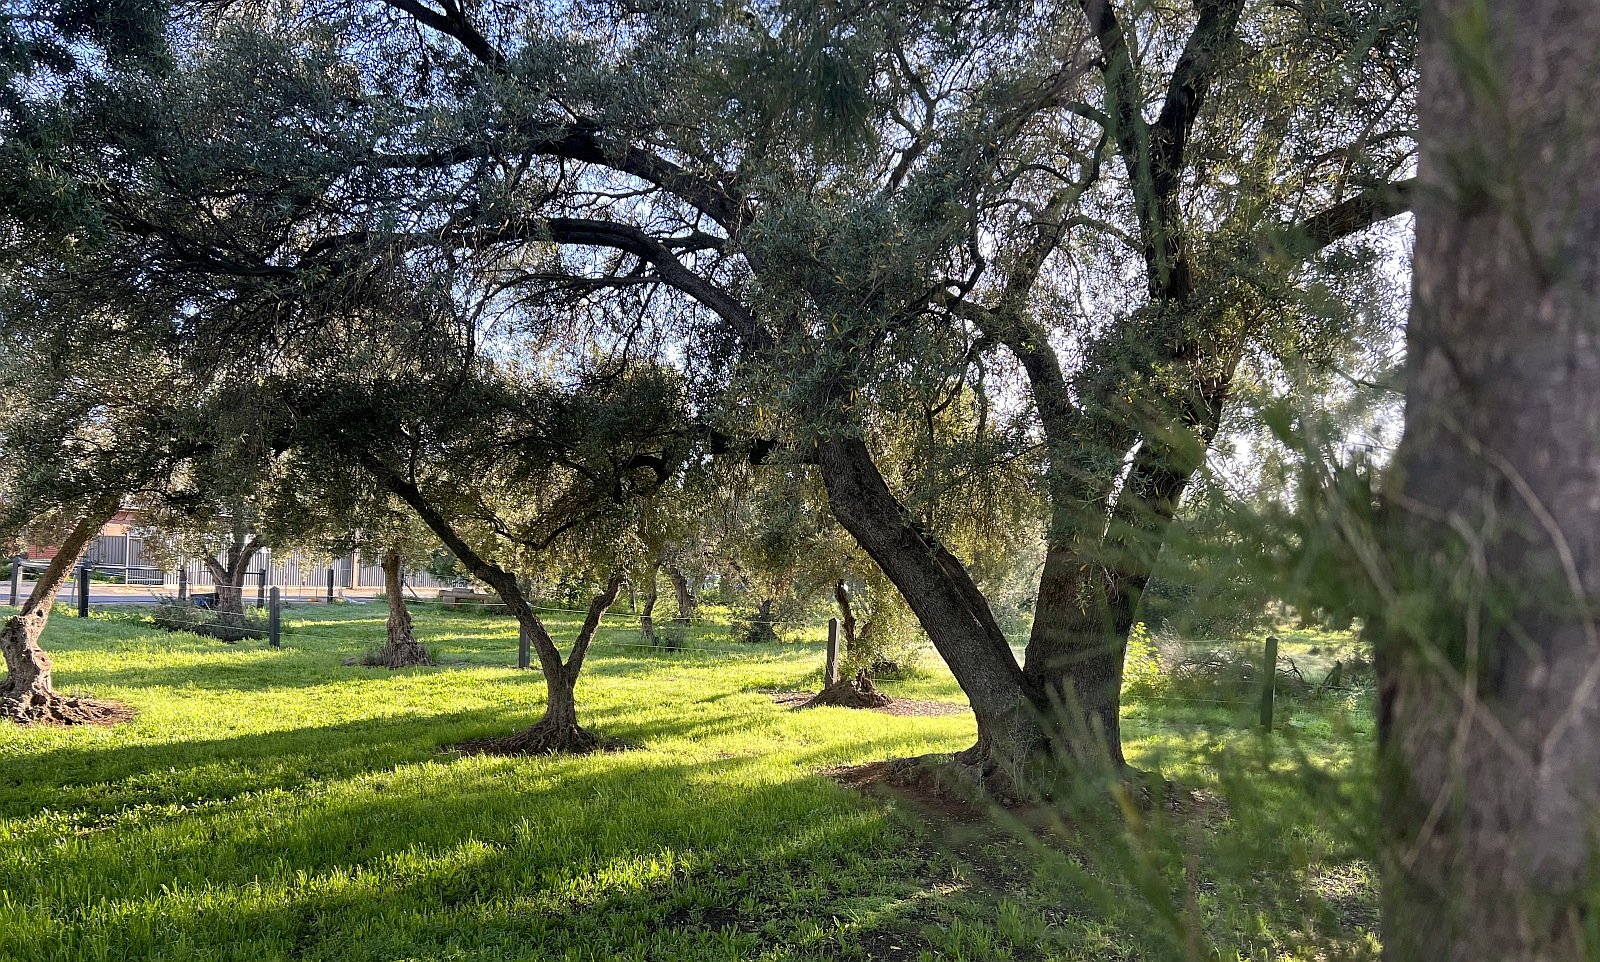 Part of the olive and sheoak forest destined for destruction